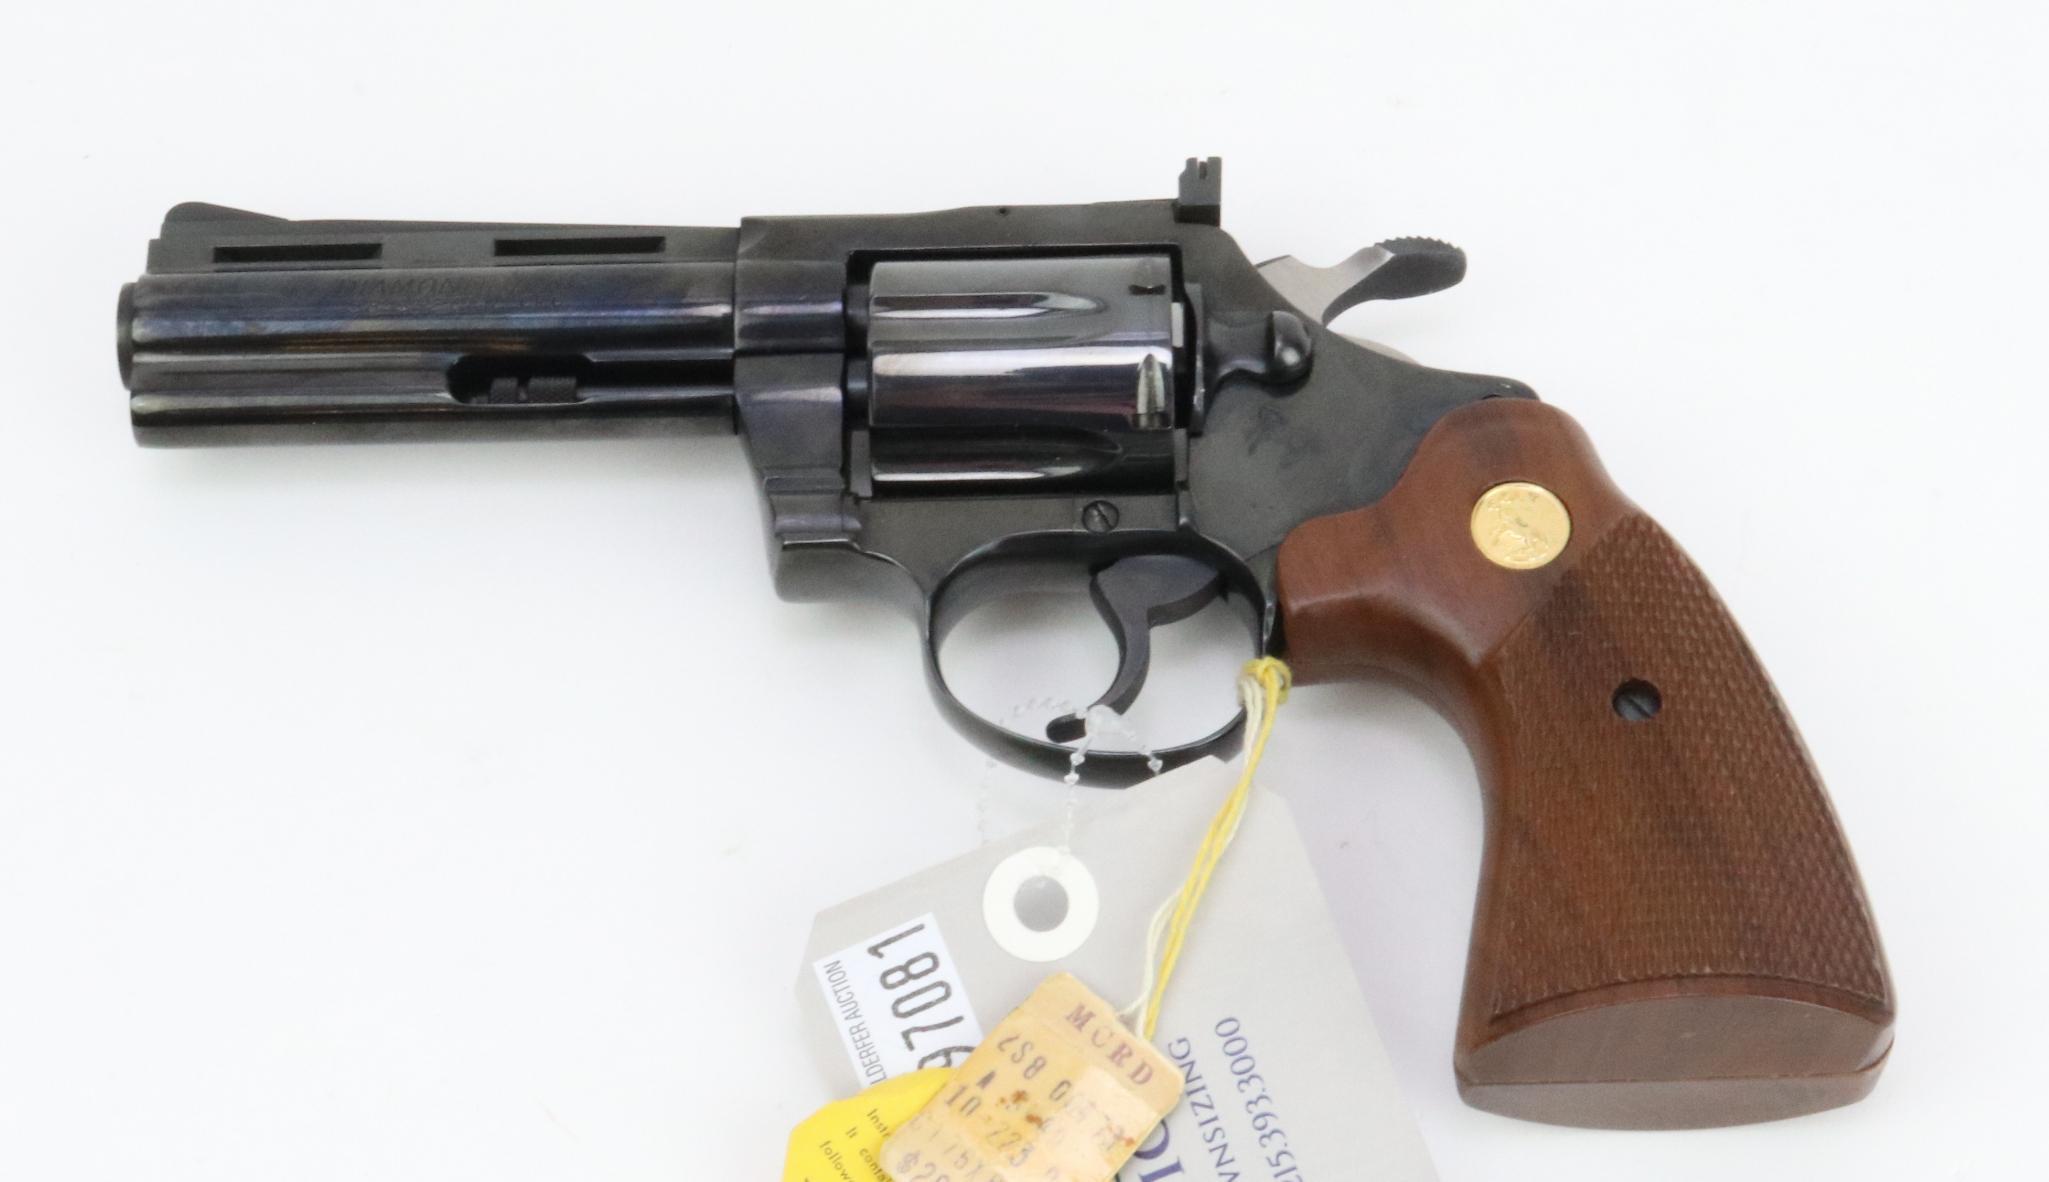 Colt Diamondback double action revolver.